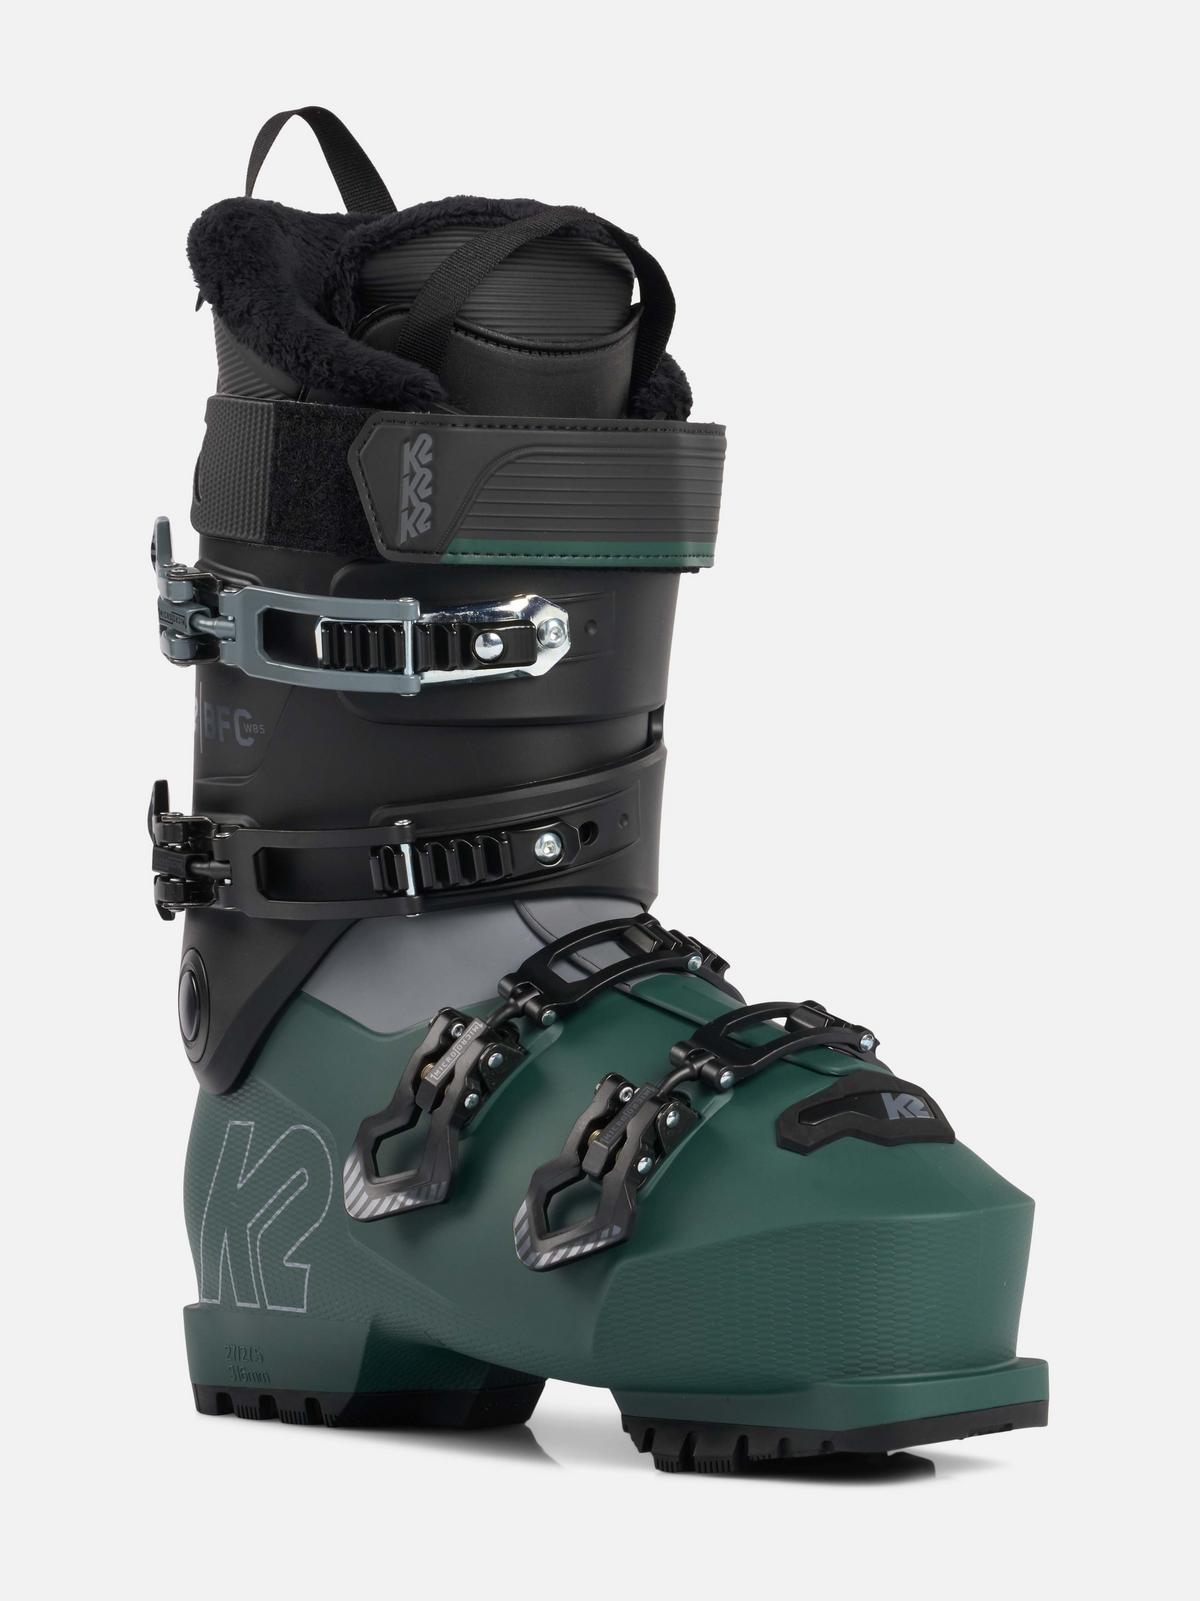 B.F.C. W 85 Ski Boots | K2 Skis and K2 Snowboarding